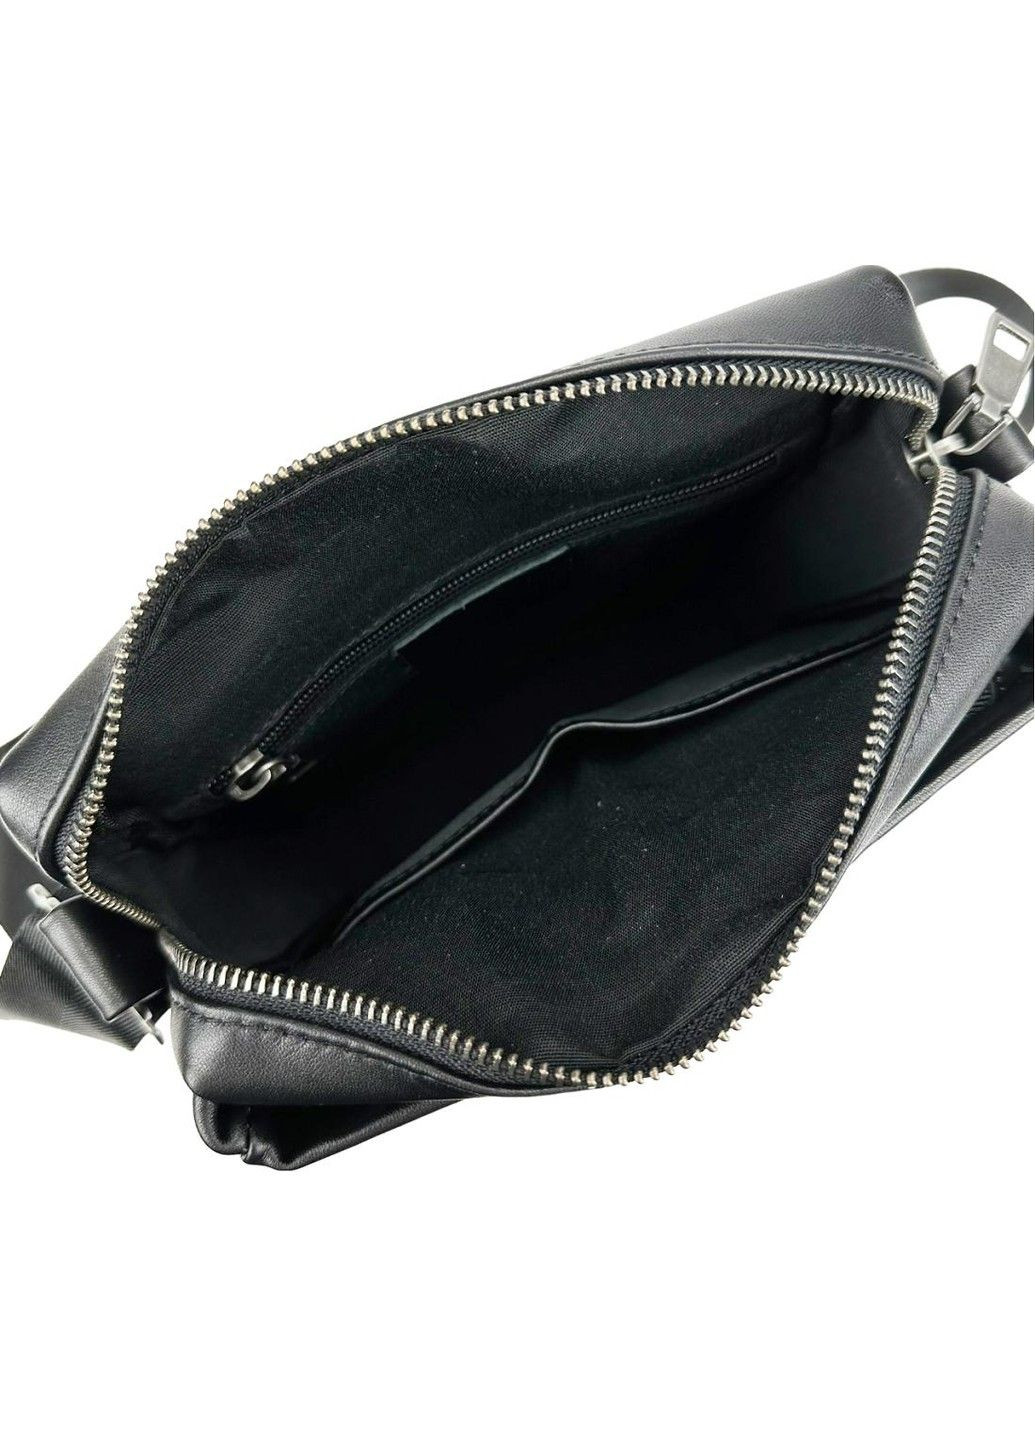 Сумка мужская кожаная черная 1007A Tiding Bag (291984051)